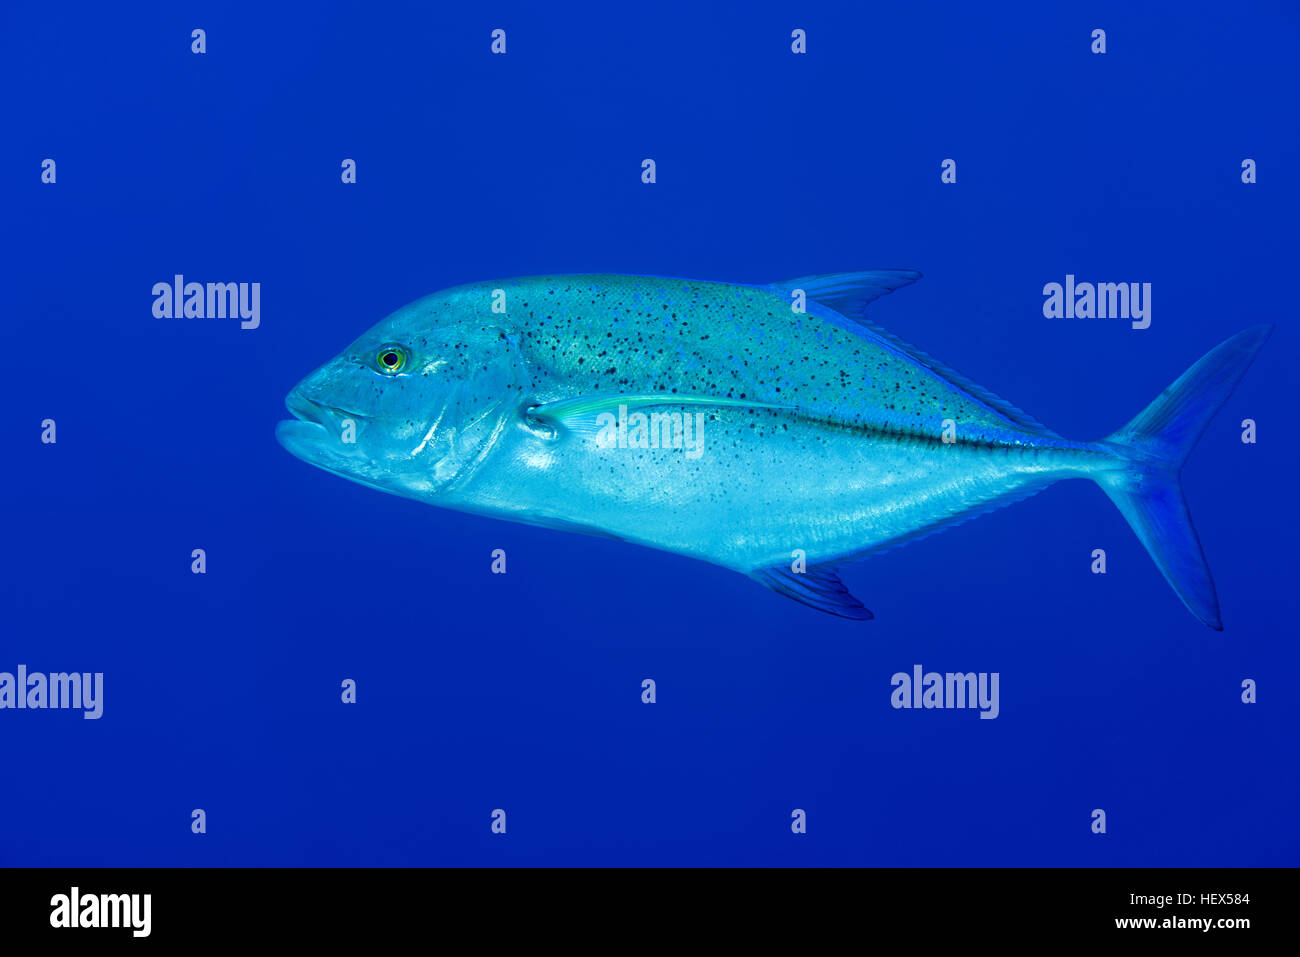 Bluefin trevally, Bayad, Bluefin jack, bluefin kingfish, Bluefinned crevalle, Blue ulua, Omilu or Spotted trevally (Caranx melampygus) on blue backgro Stock Photo